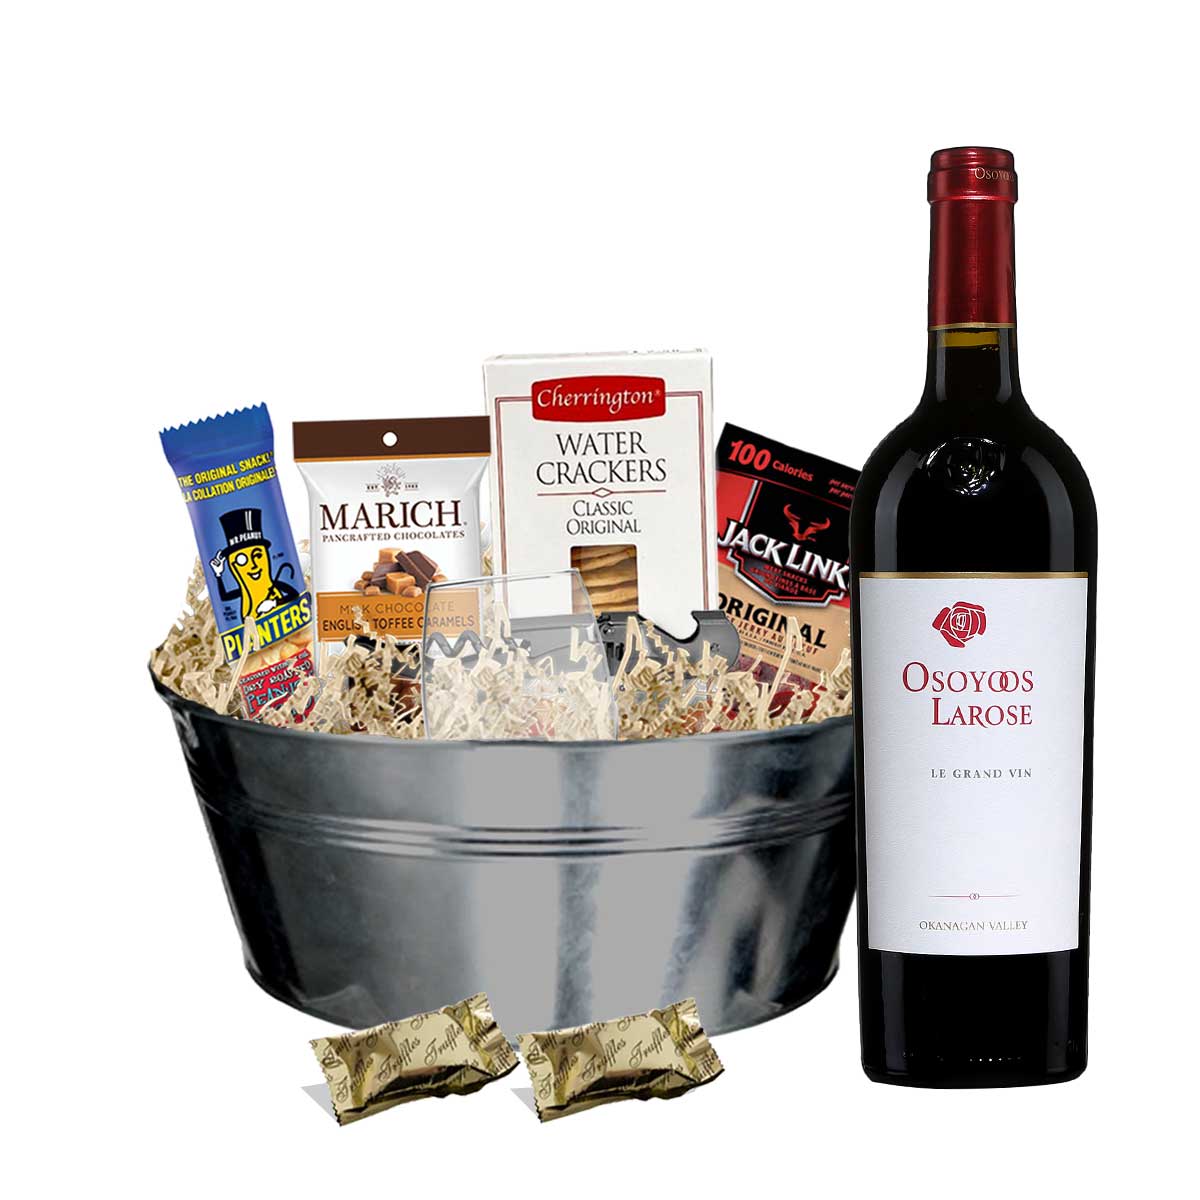 TAG Liquor Stores BC - Osoyoos Larose Le Grand Vin 750ml Gift Basket